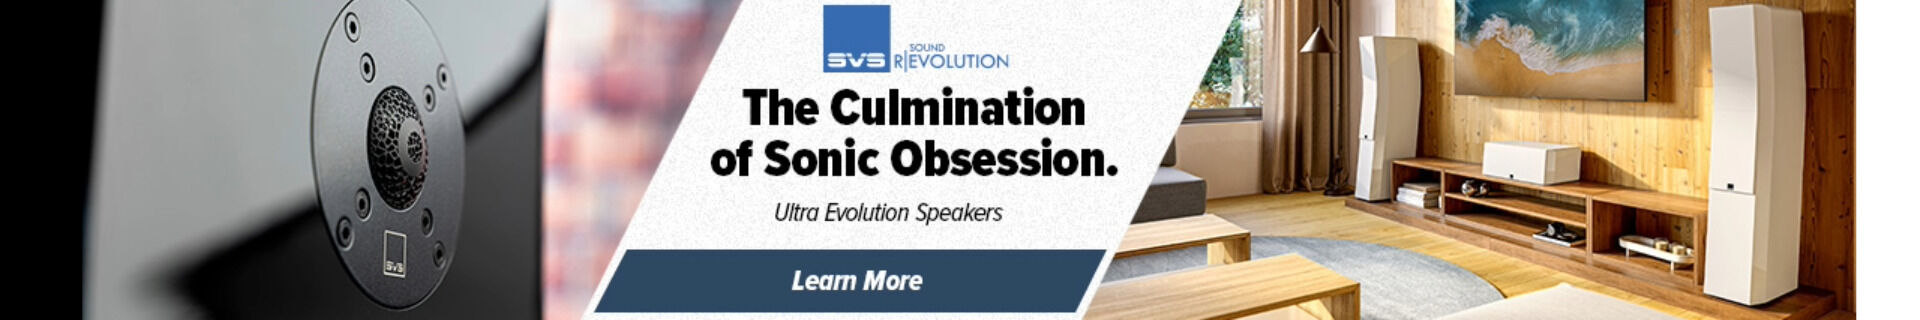 SVS Ultra Evolution